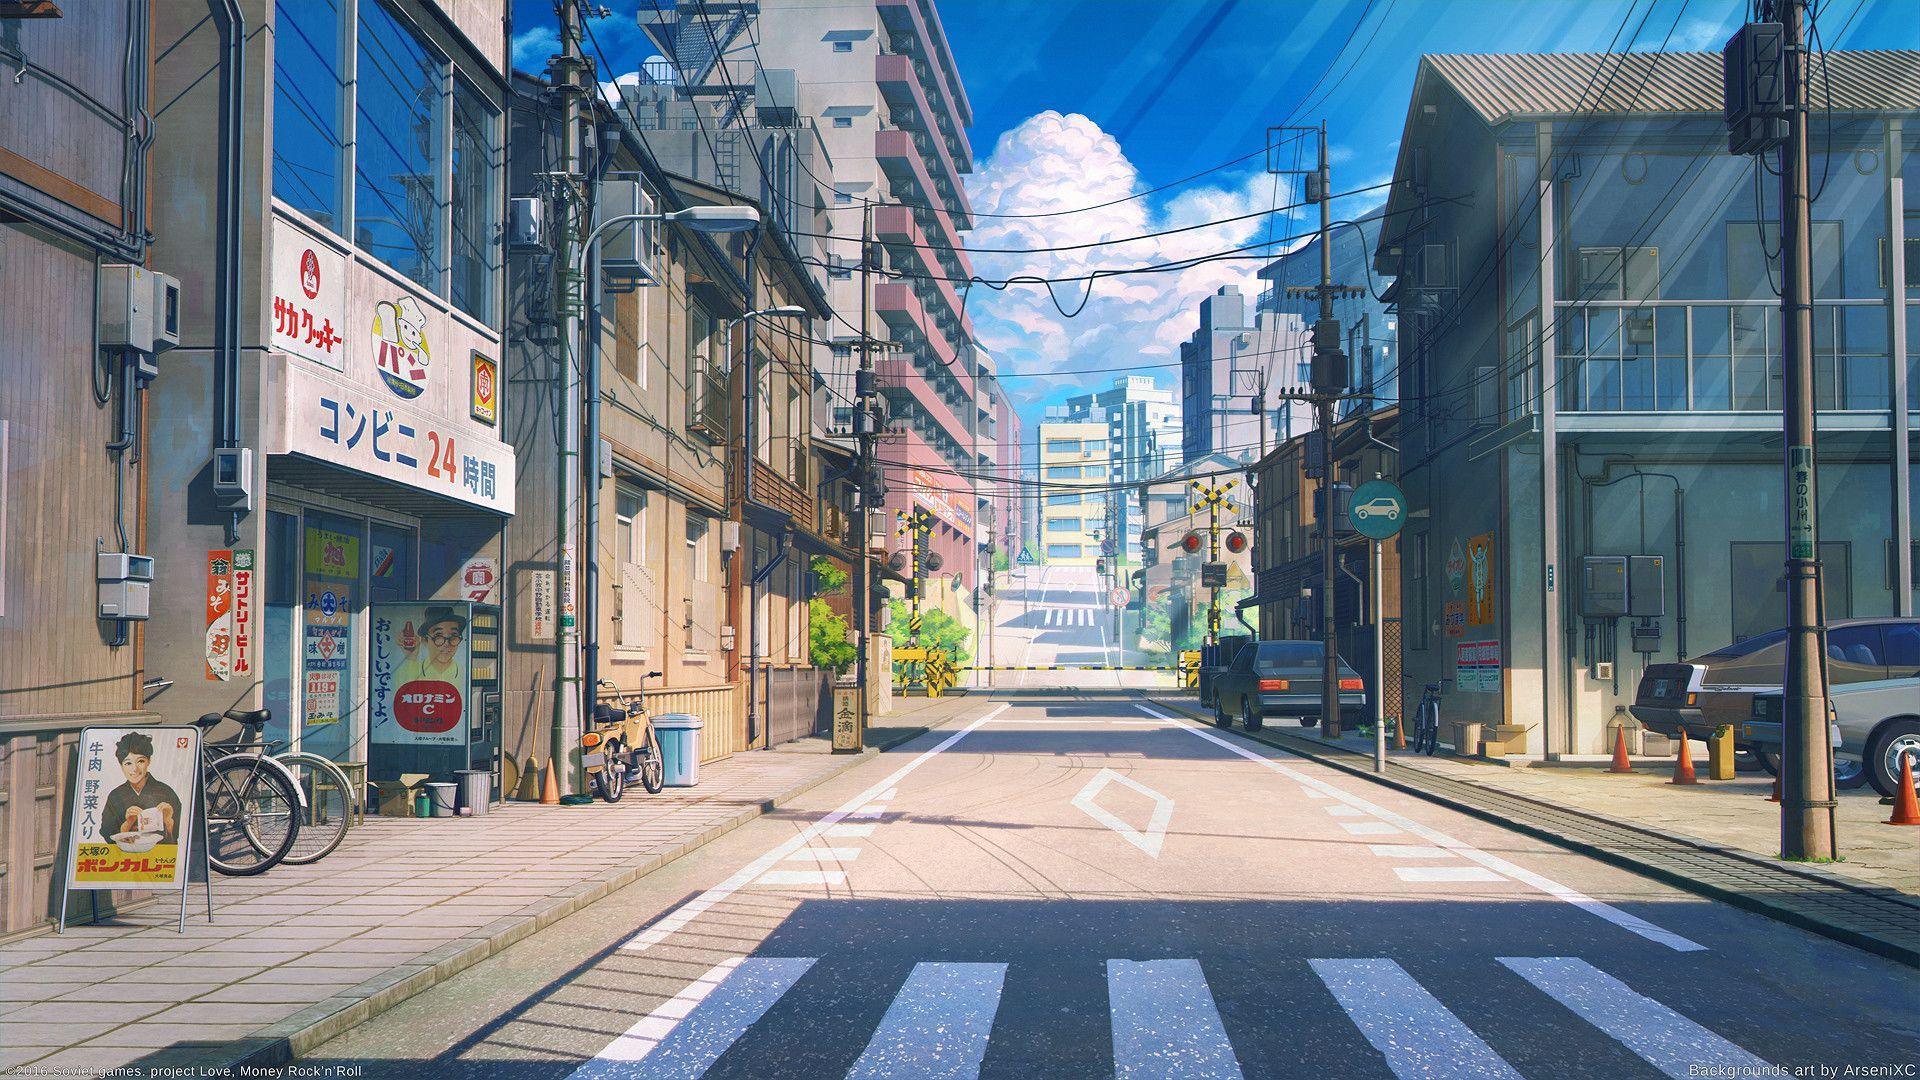 Japan In The 1980s. Japan. Anime city, Anime scenery